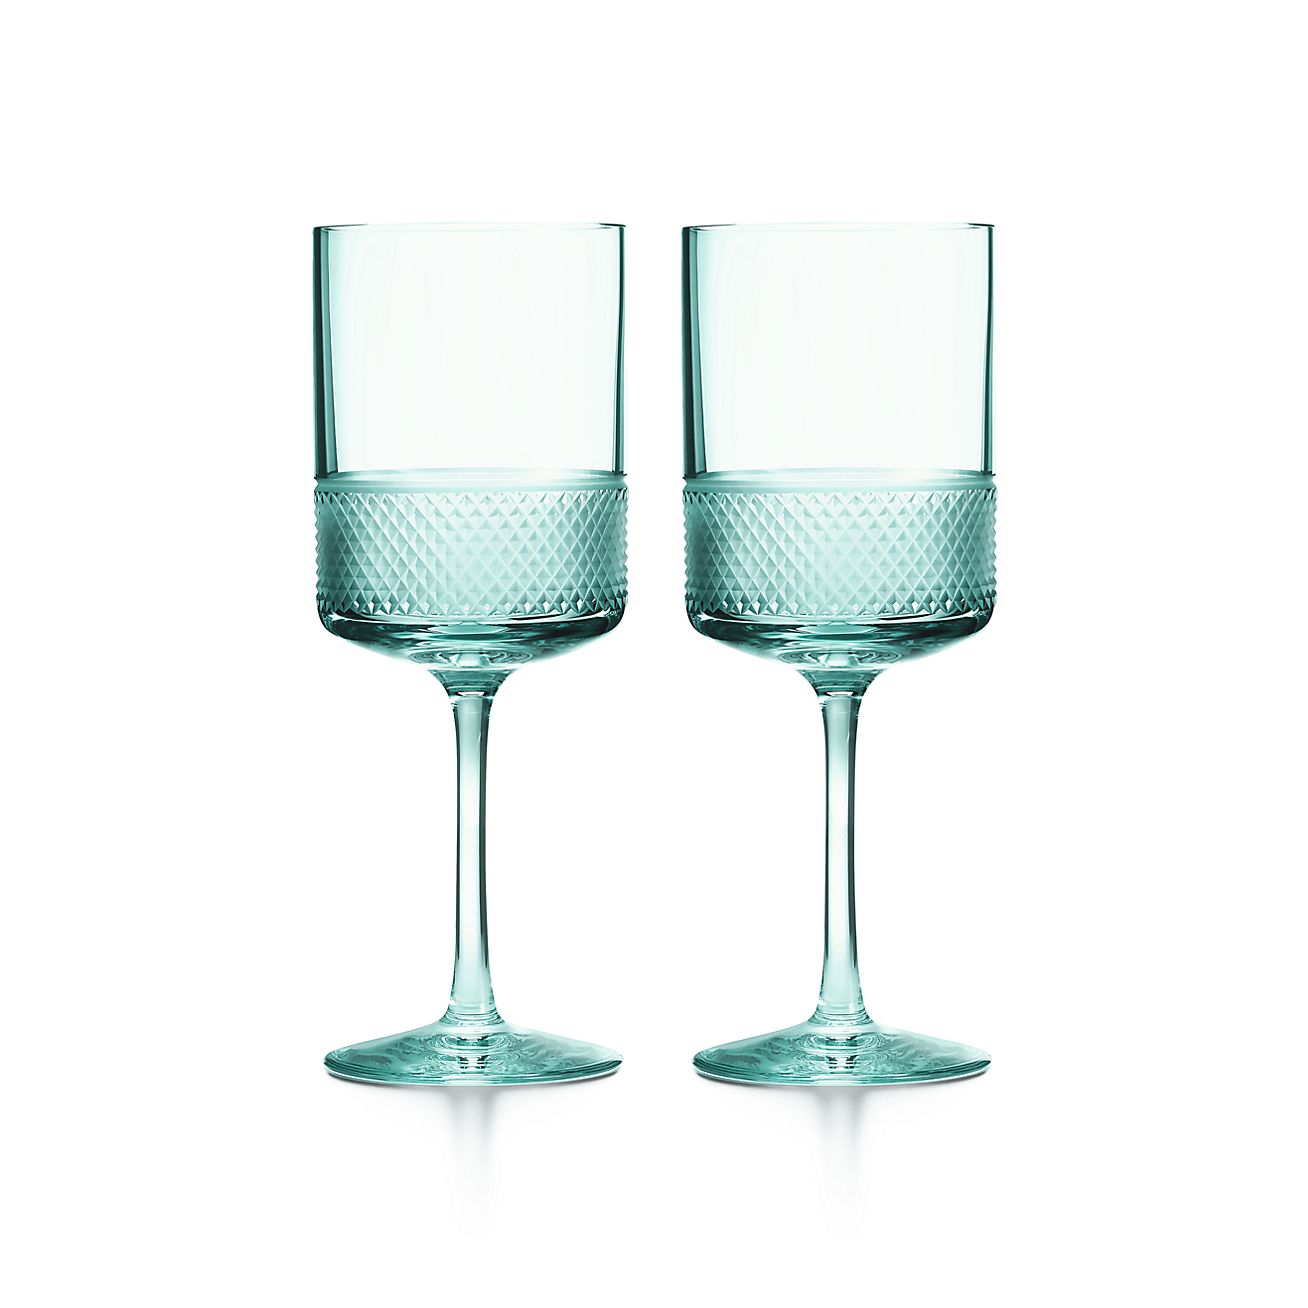 Diamond Point wine glasses in Tiffany 